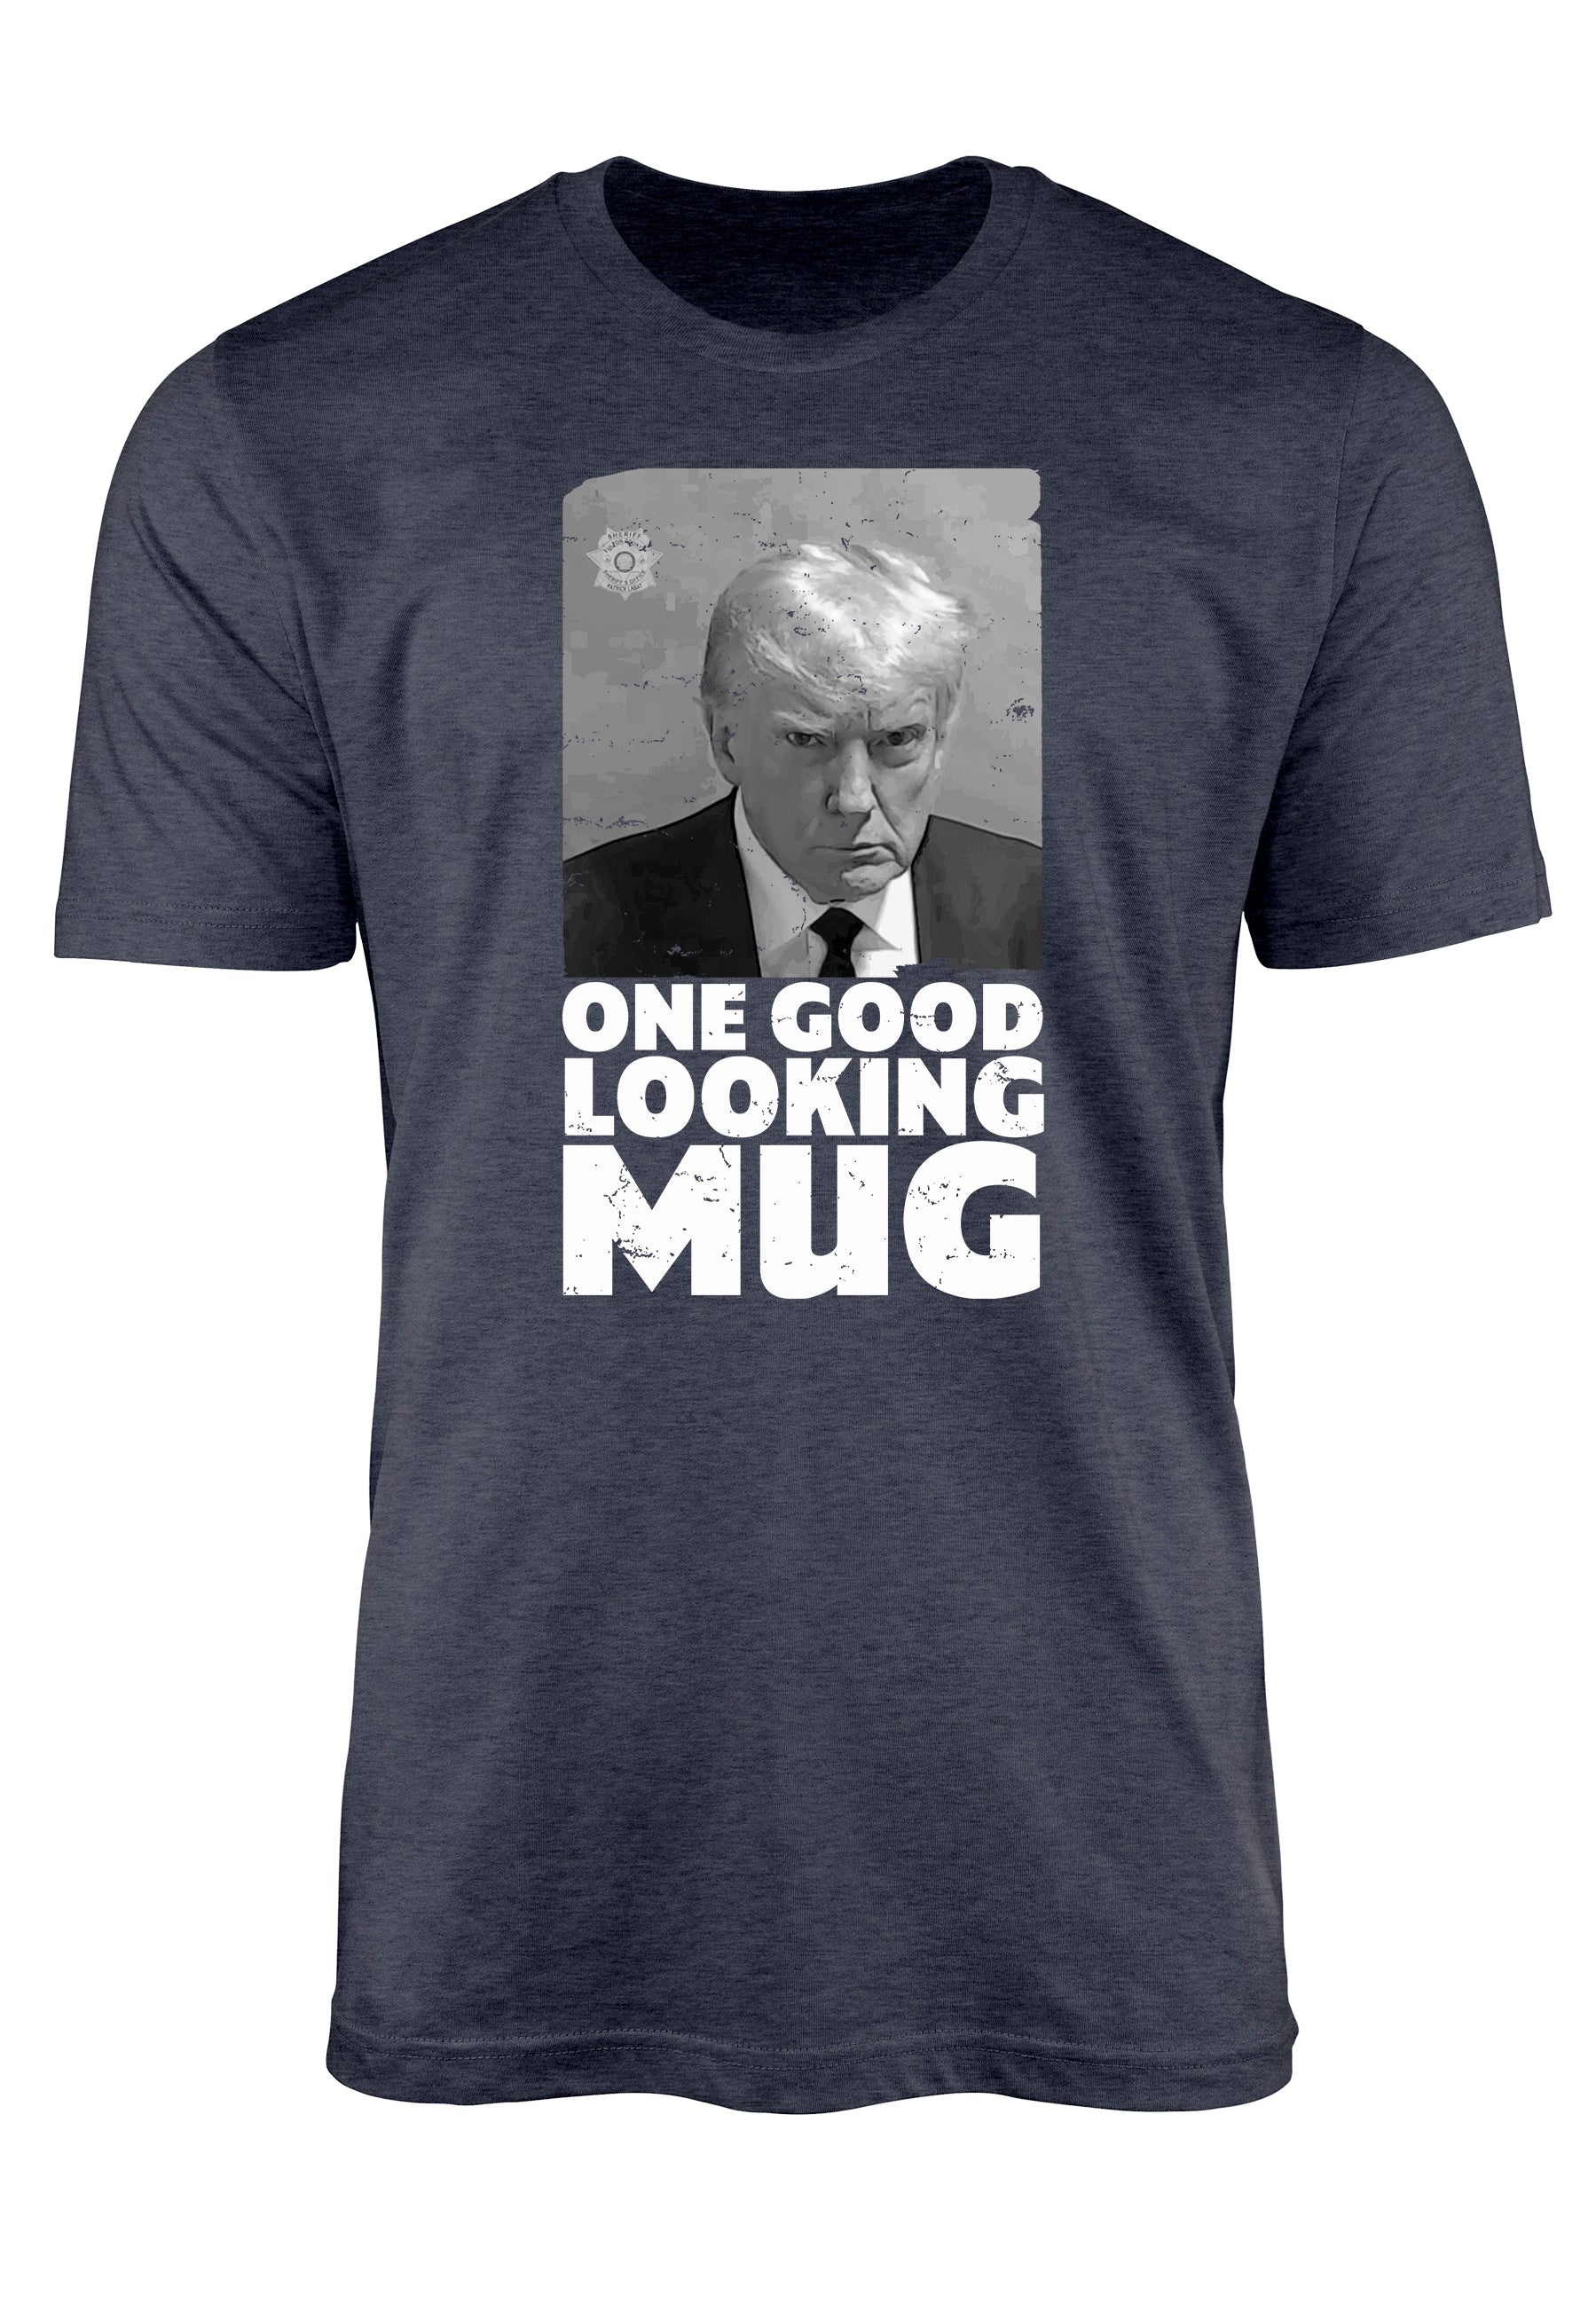 trump mugshot t-shirt black and white distressed